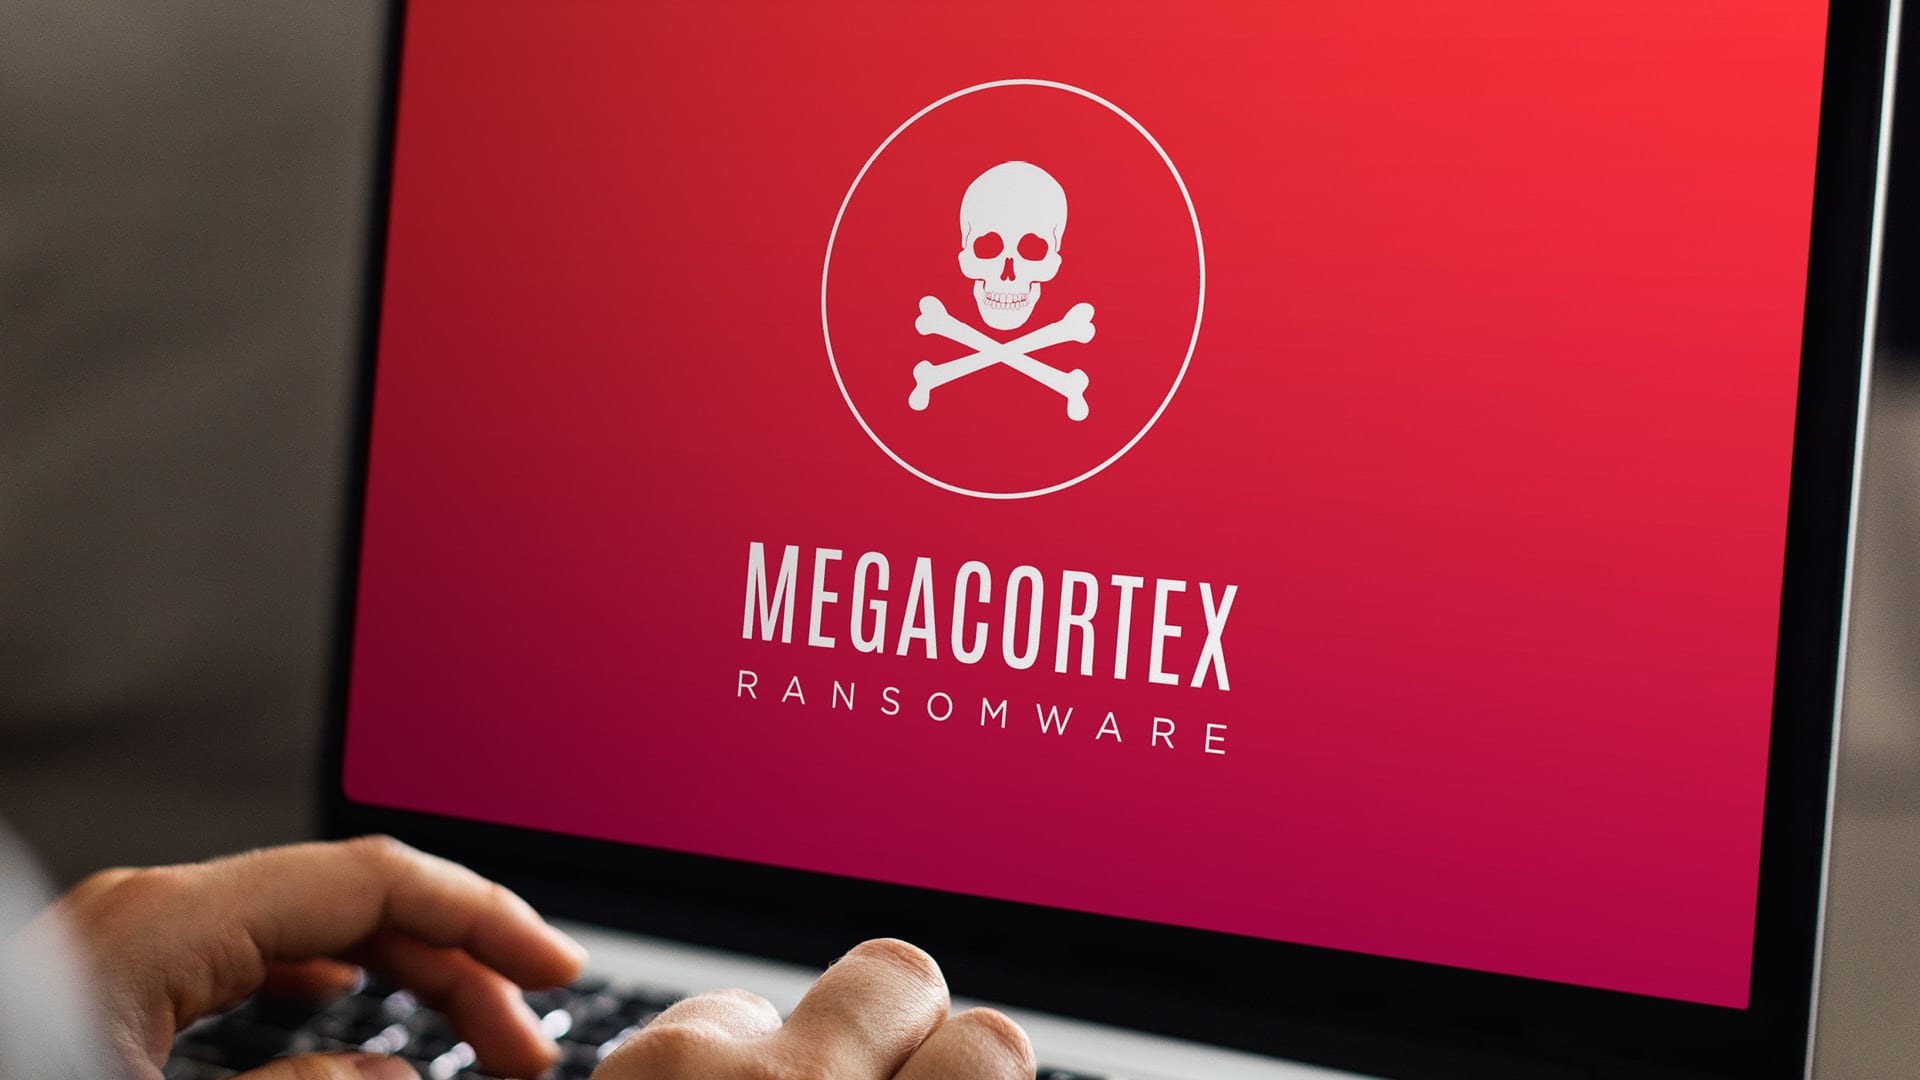 Megacortex ändert Passwörter in Windows